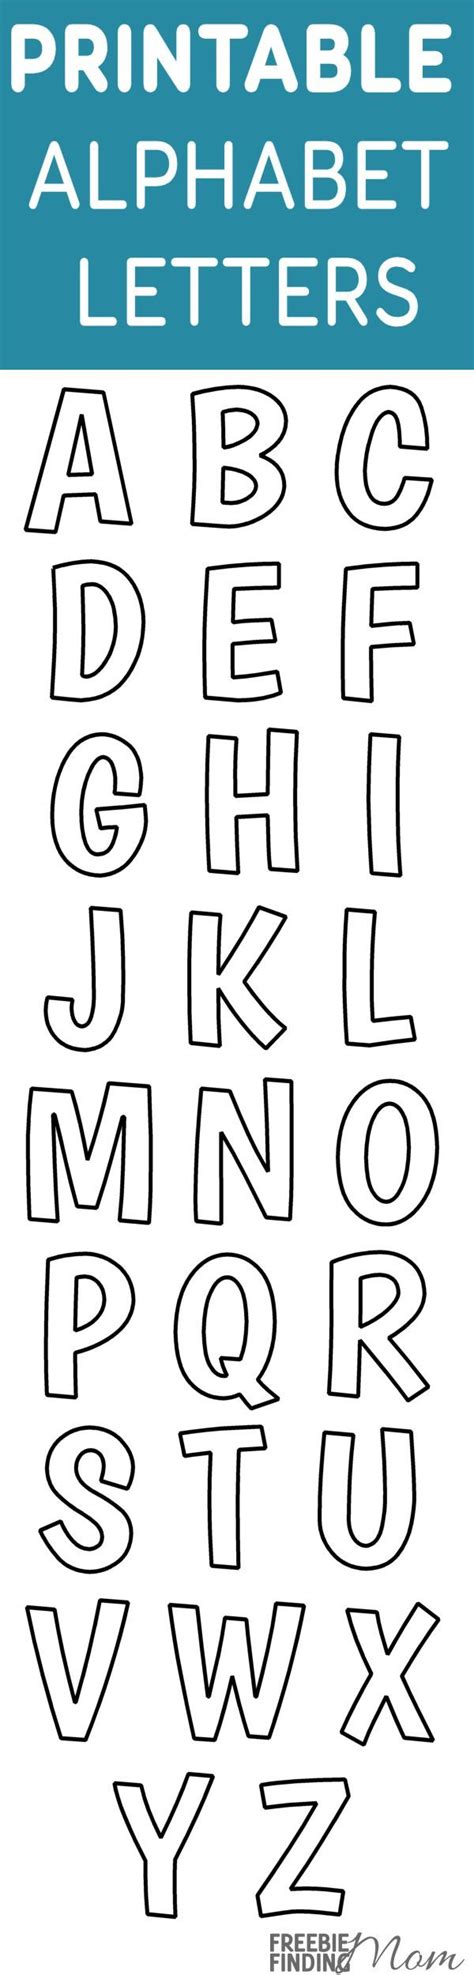 alphabet templates  printable